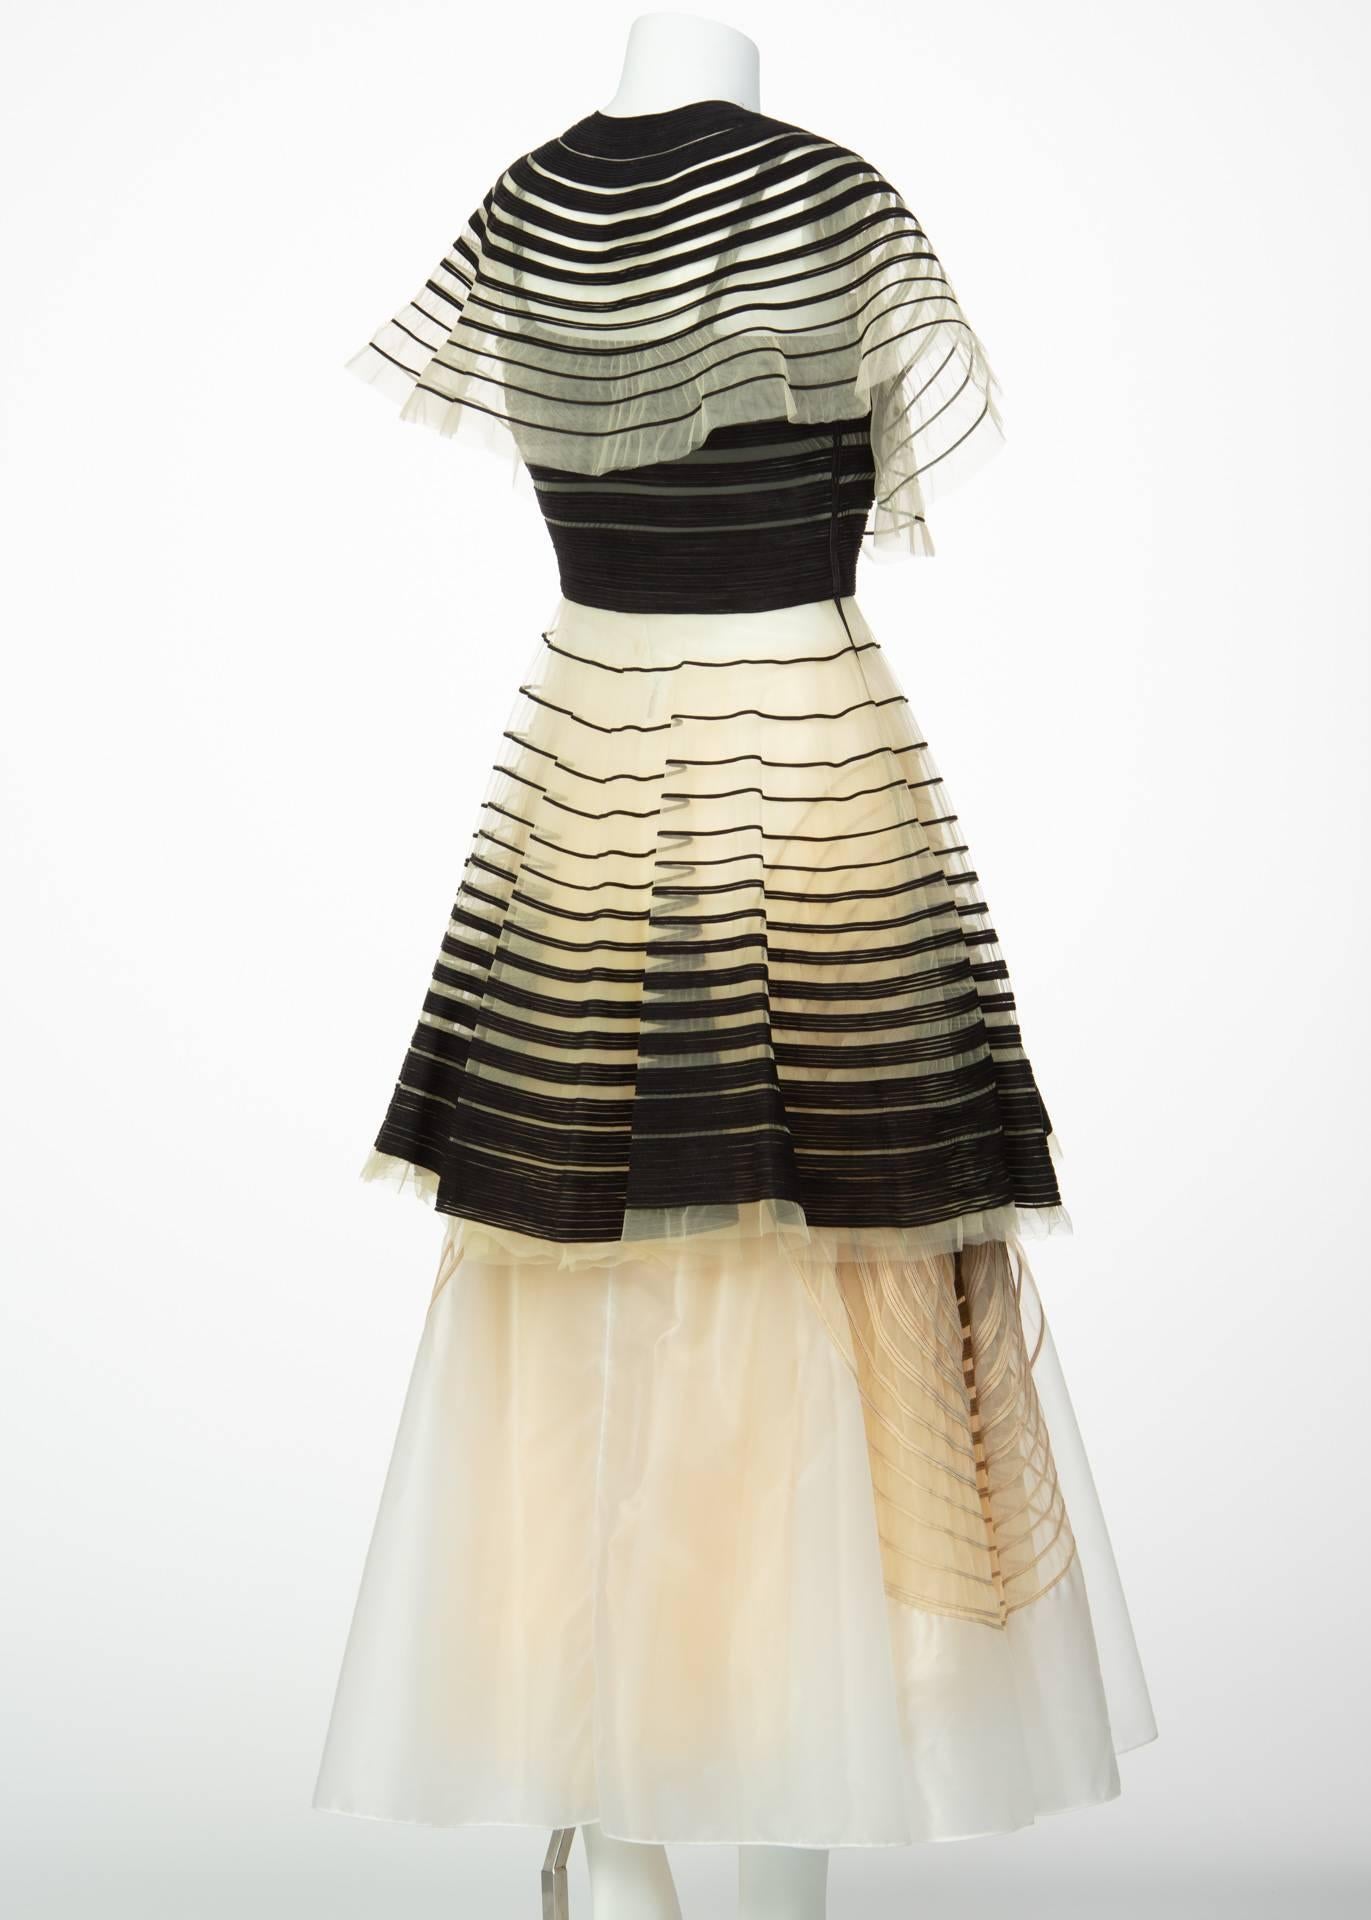 Fendi Karl Lagerfeld S/S 2008 Runway Black Cut Out Suede Dress Cape Skirt Set en vente 2